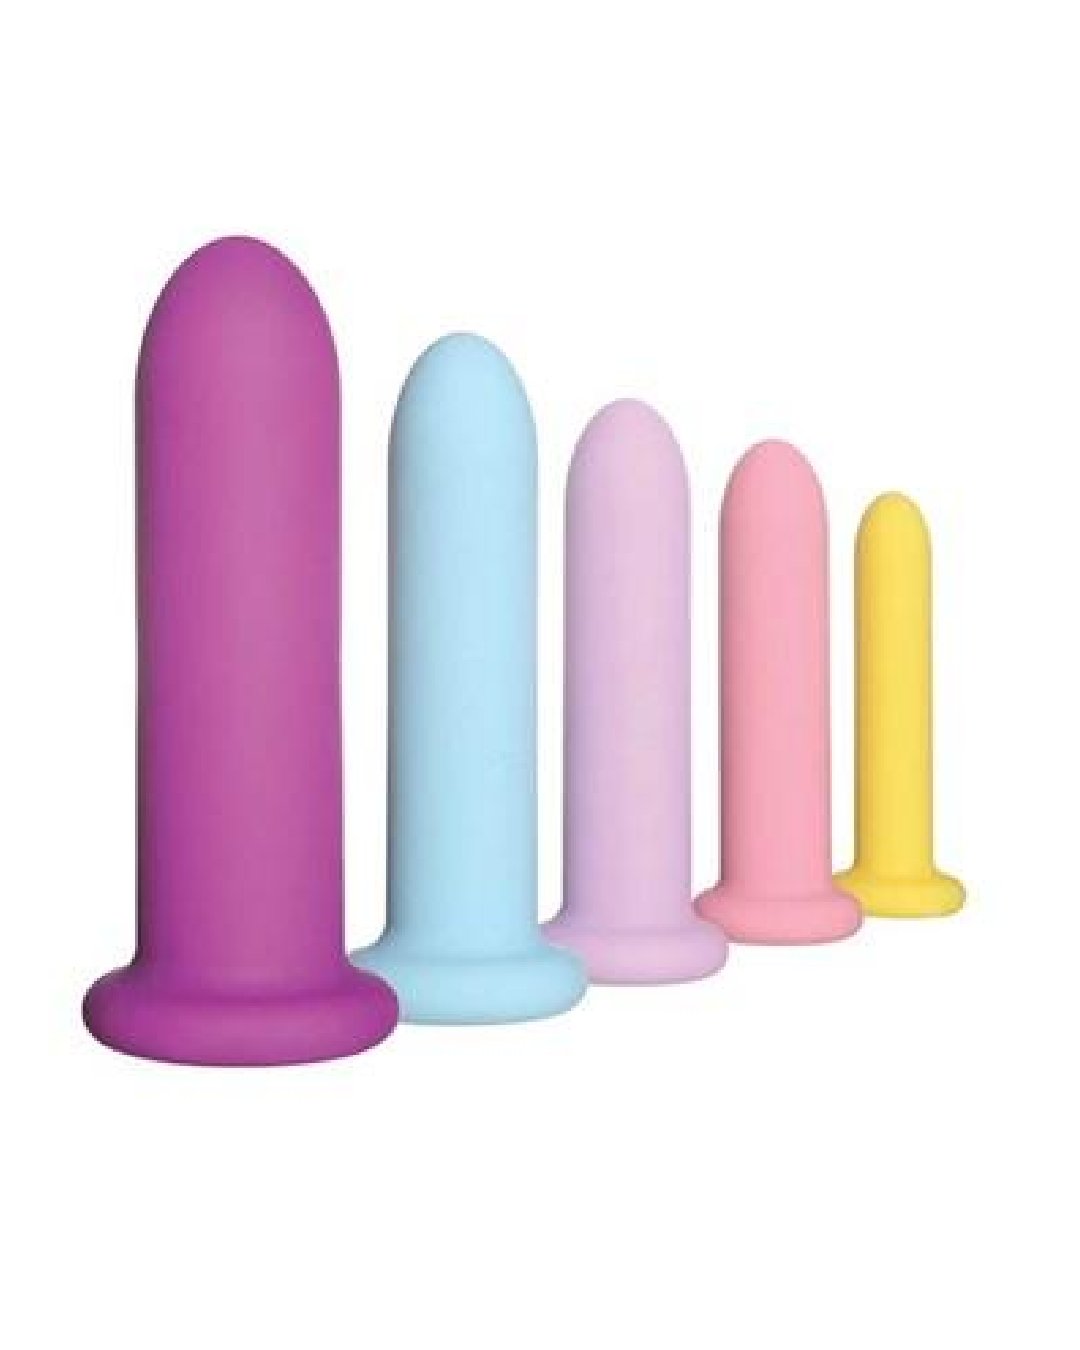 Sinclair Select Silicone Vaginal Dilator Set graduated sizes 